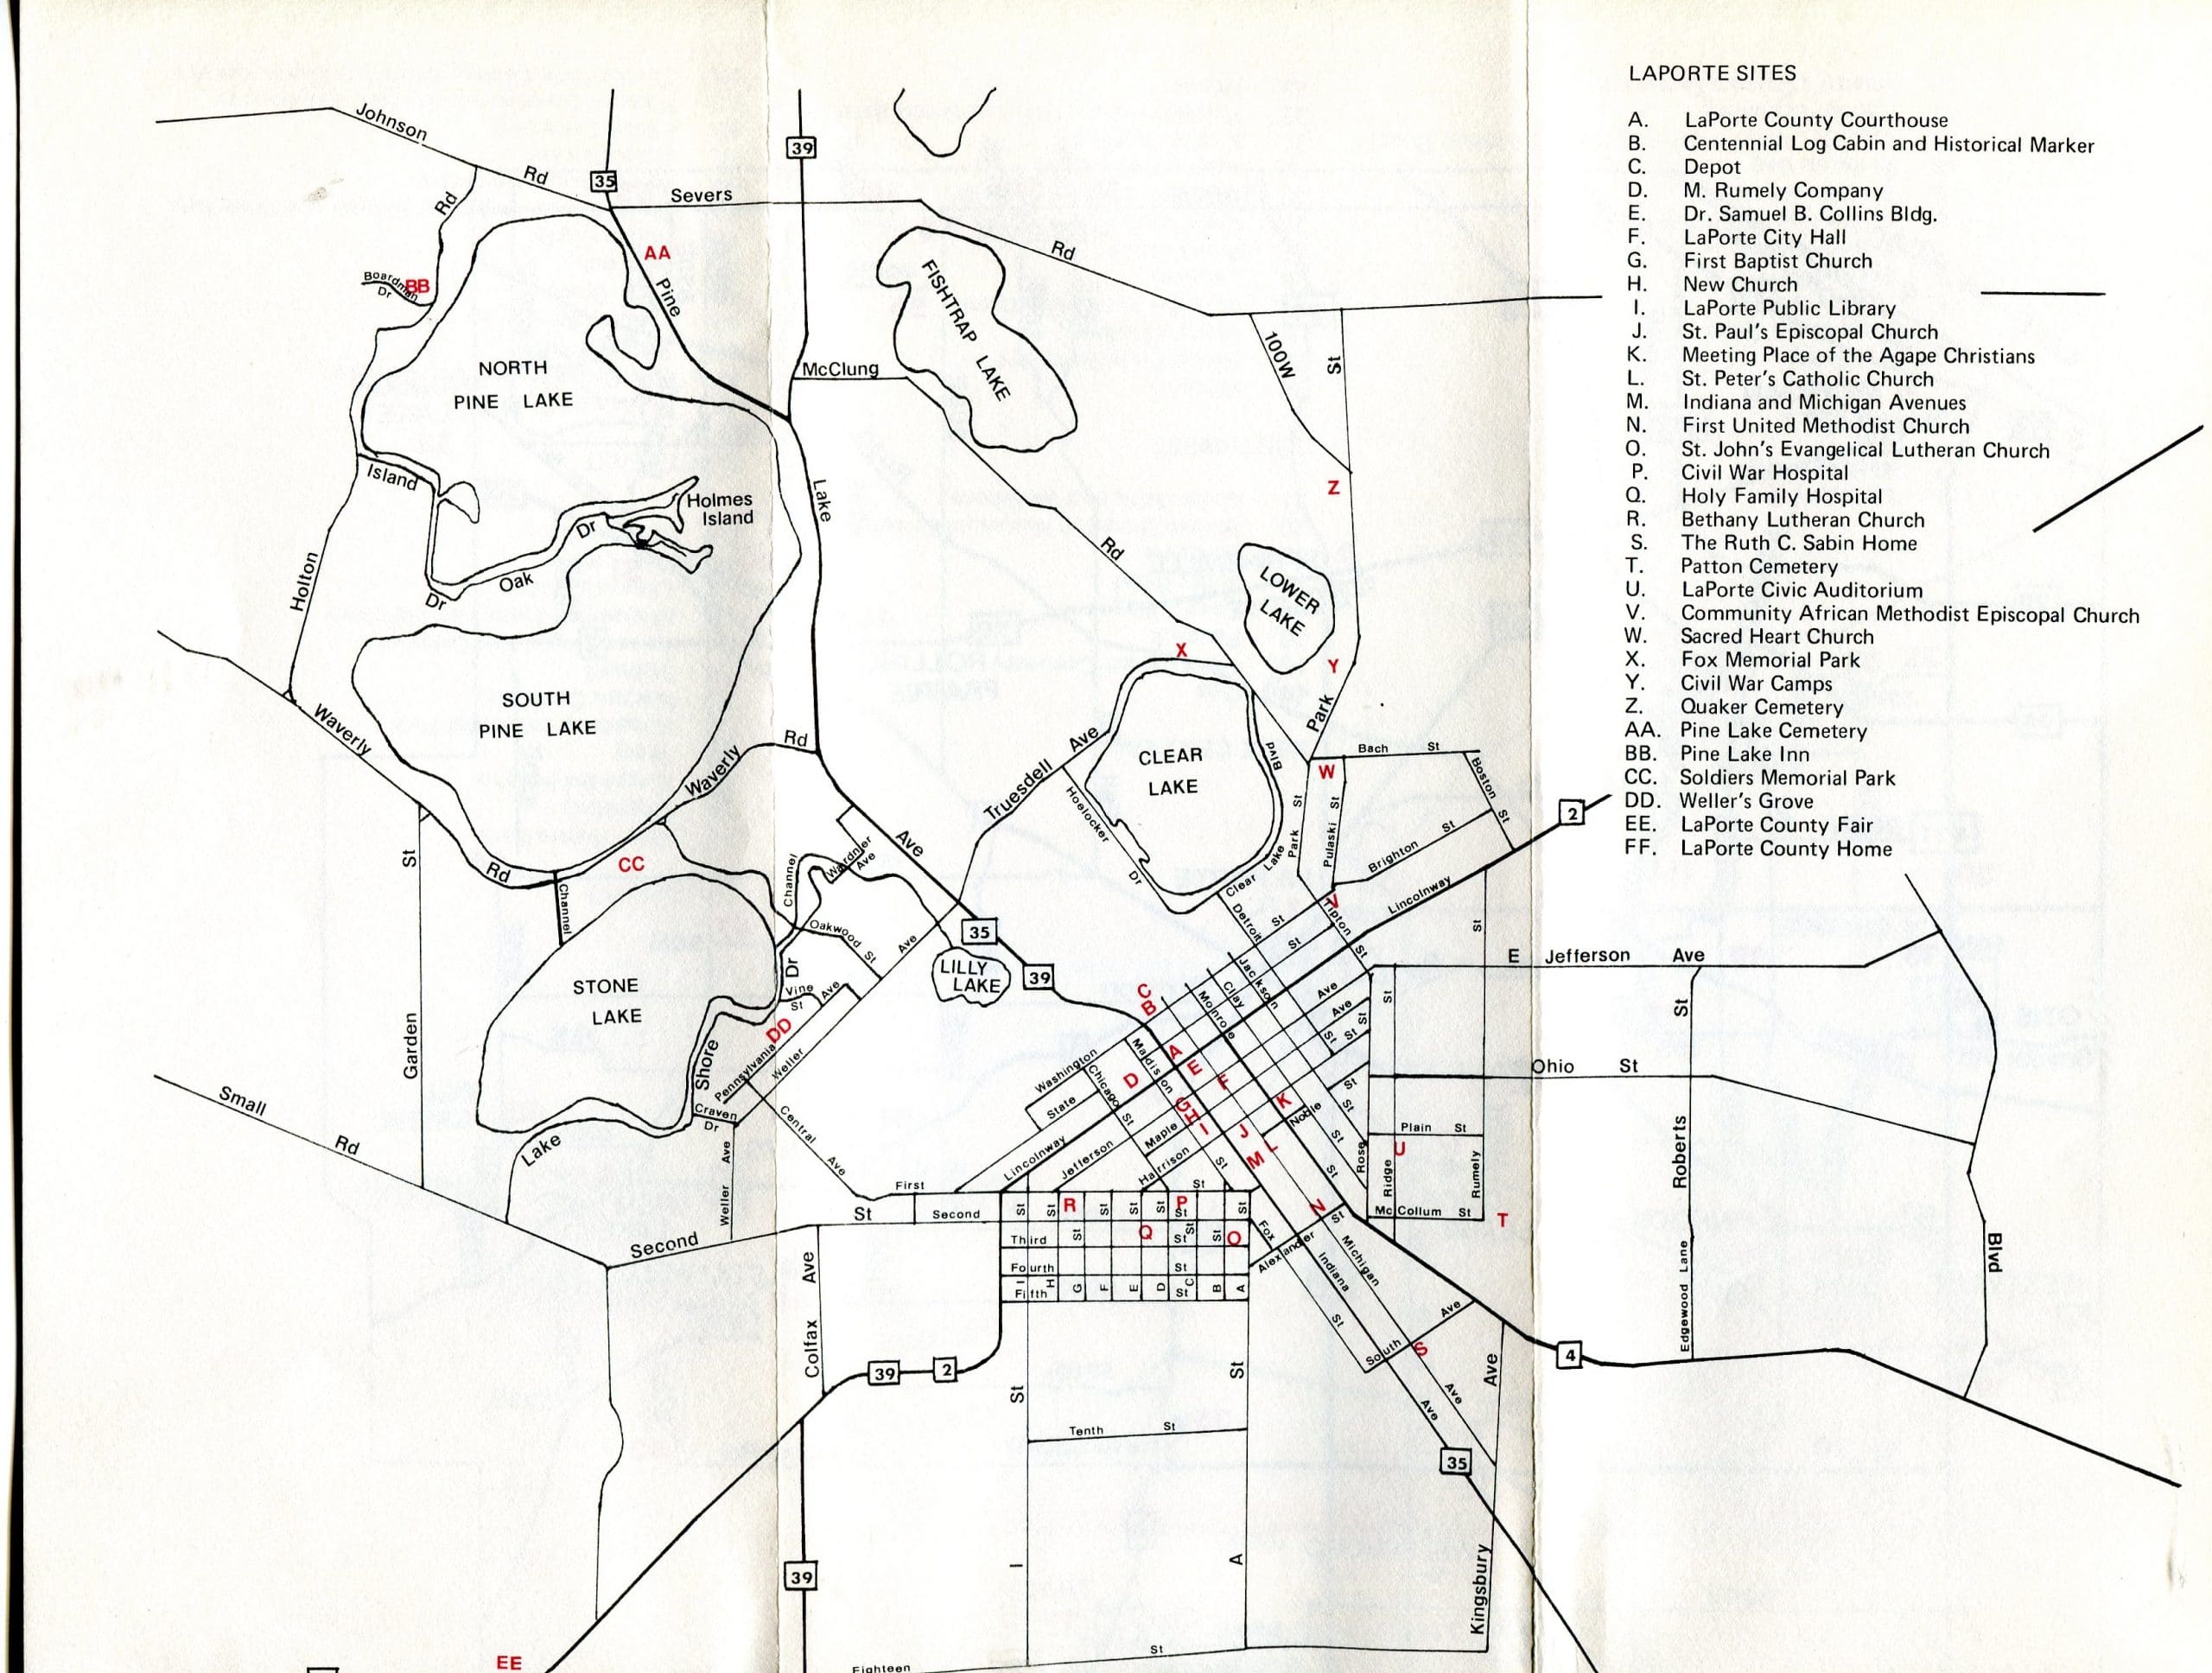 Portable LaPorte County -- map of LaPorte sites